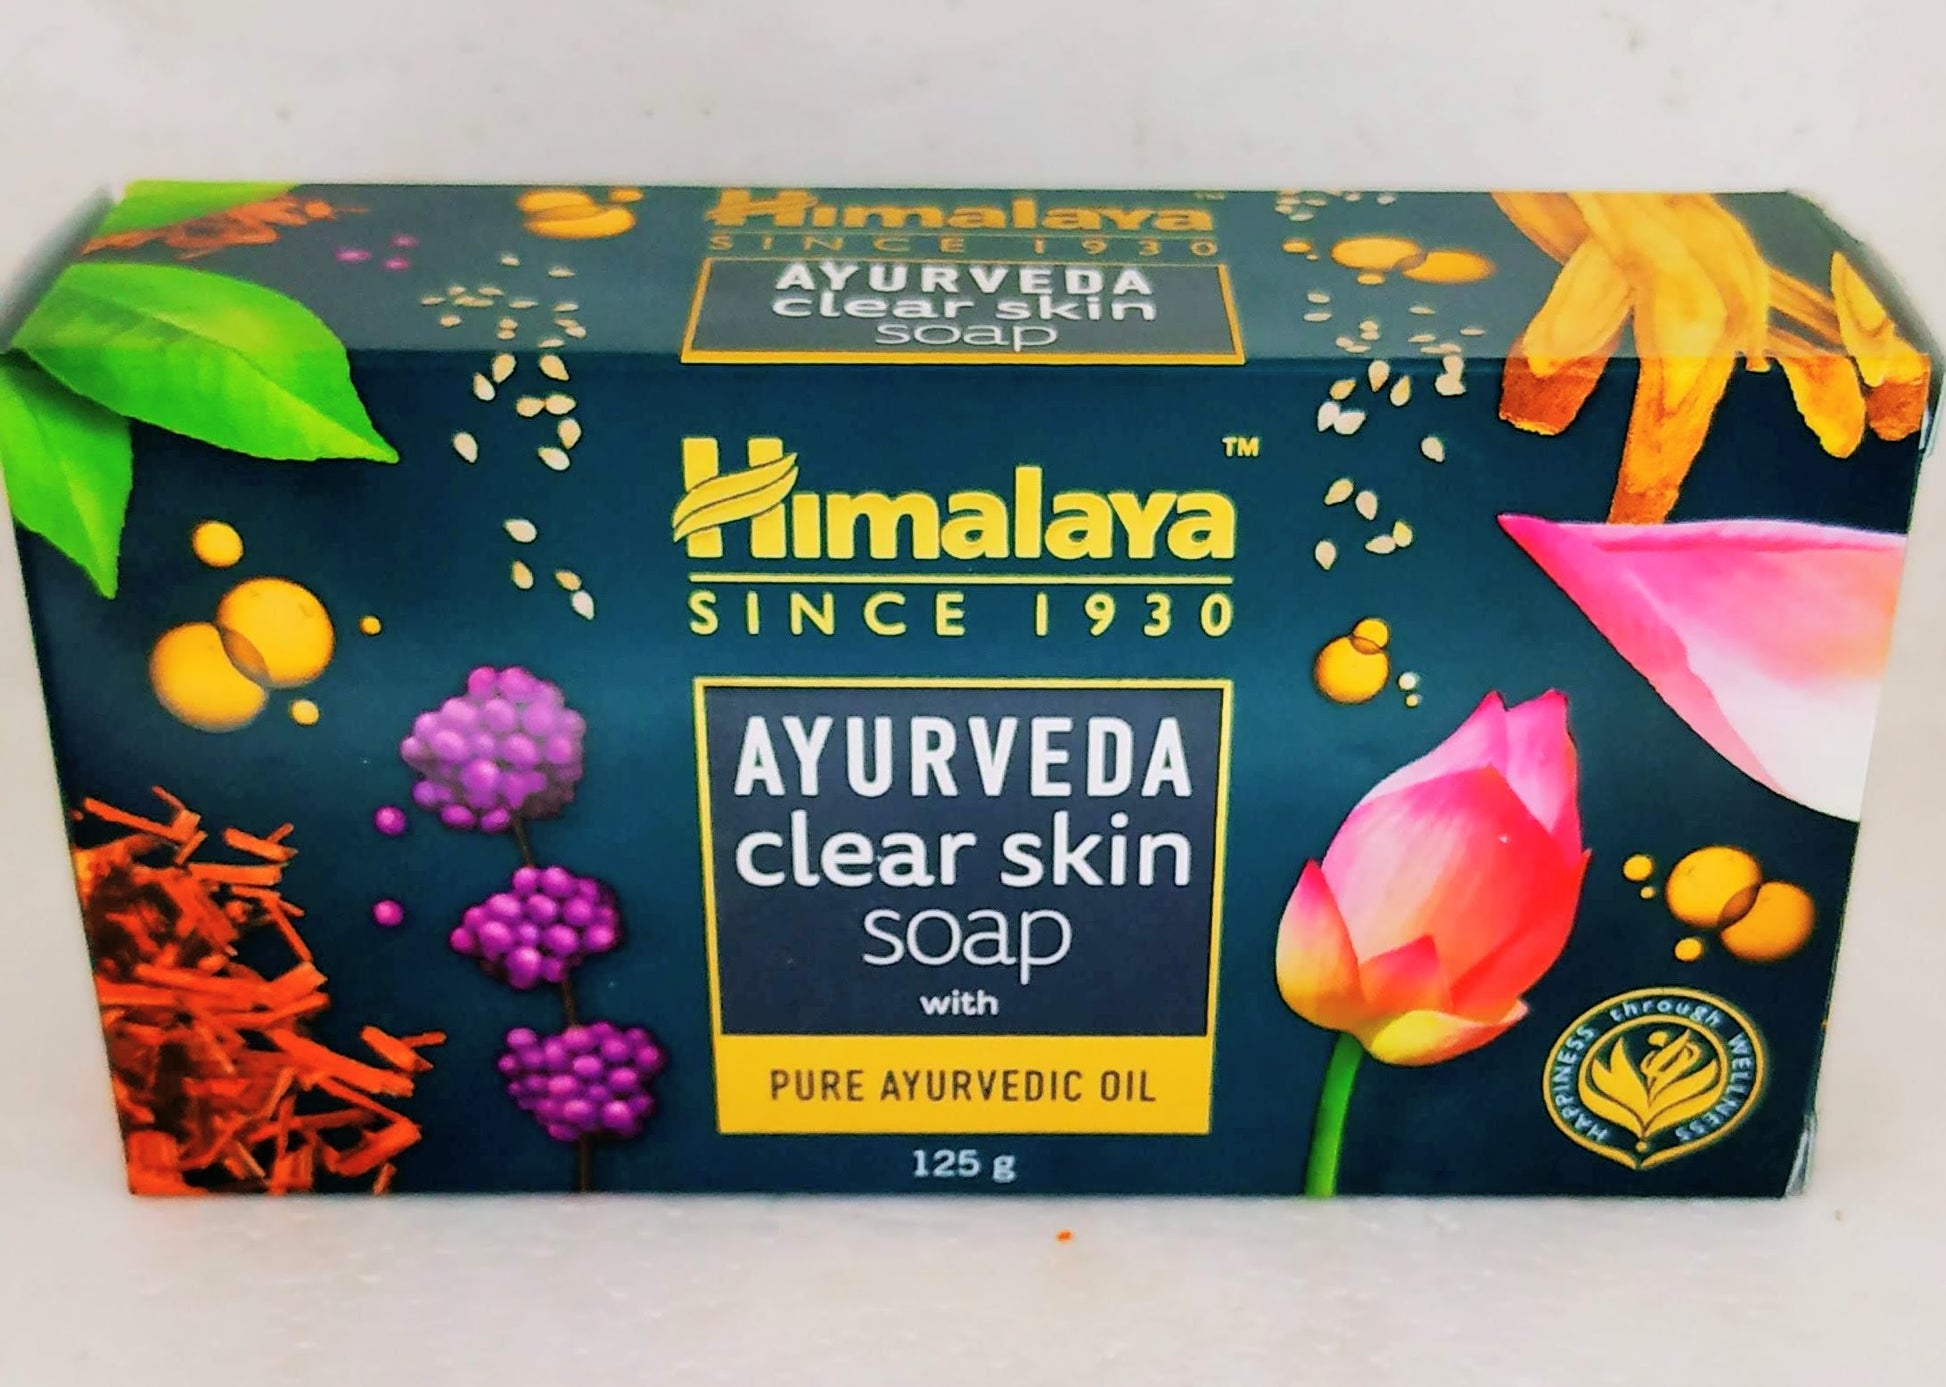 Shop Himalaya Ayurveda Clear Skin Soap 125g at price 60.00 from Himalaya Online - Ayush Care